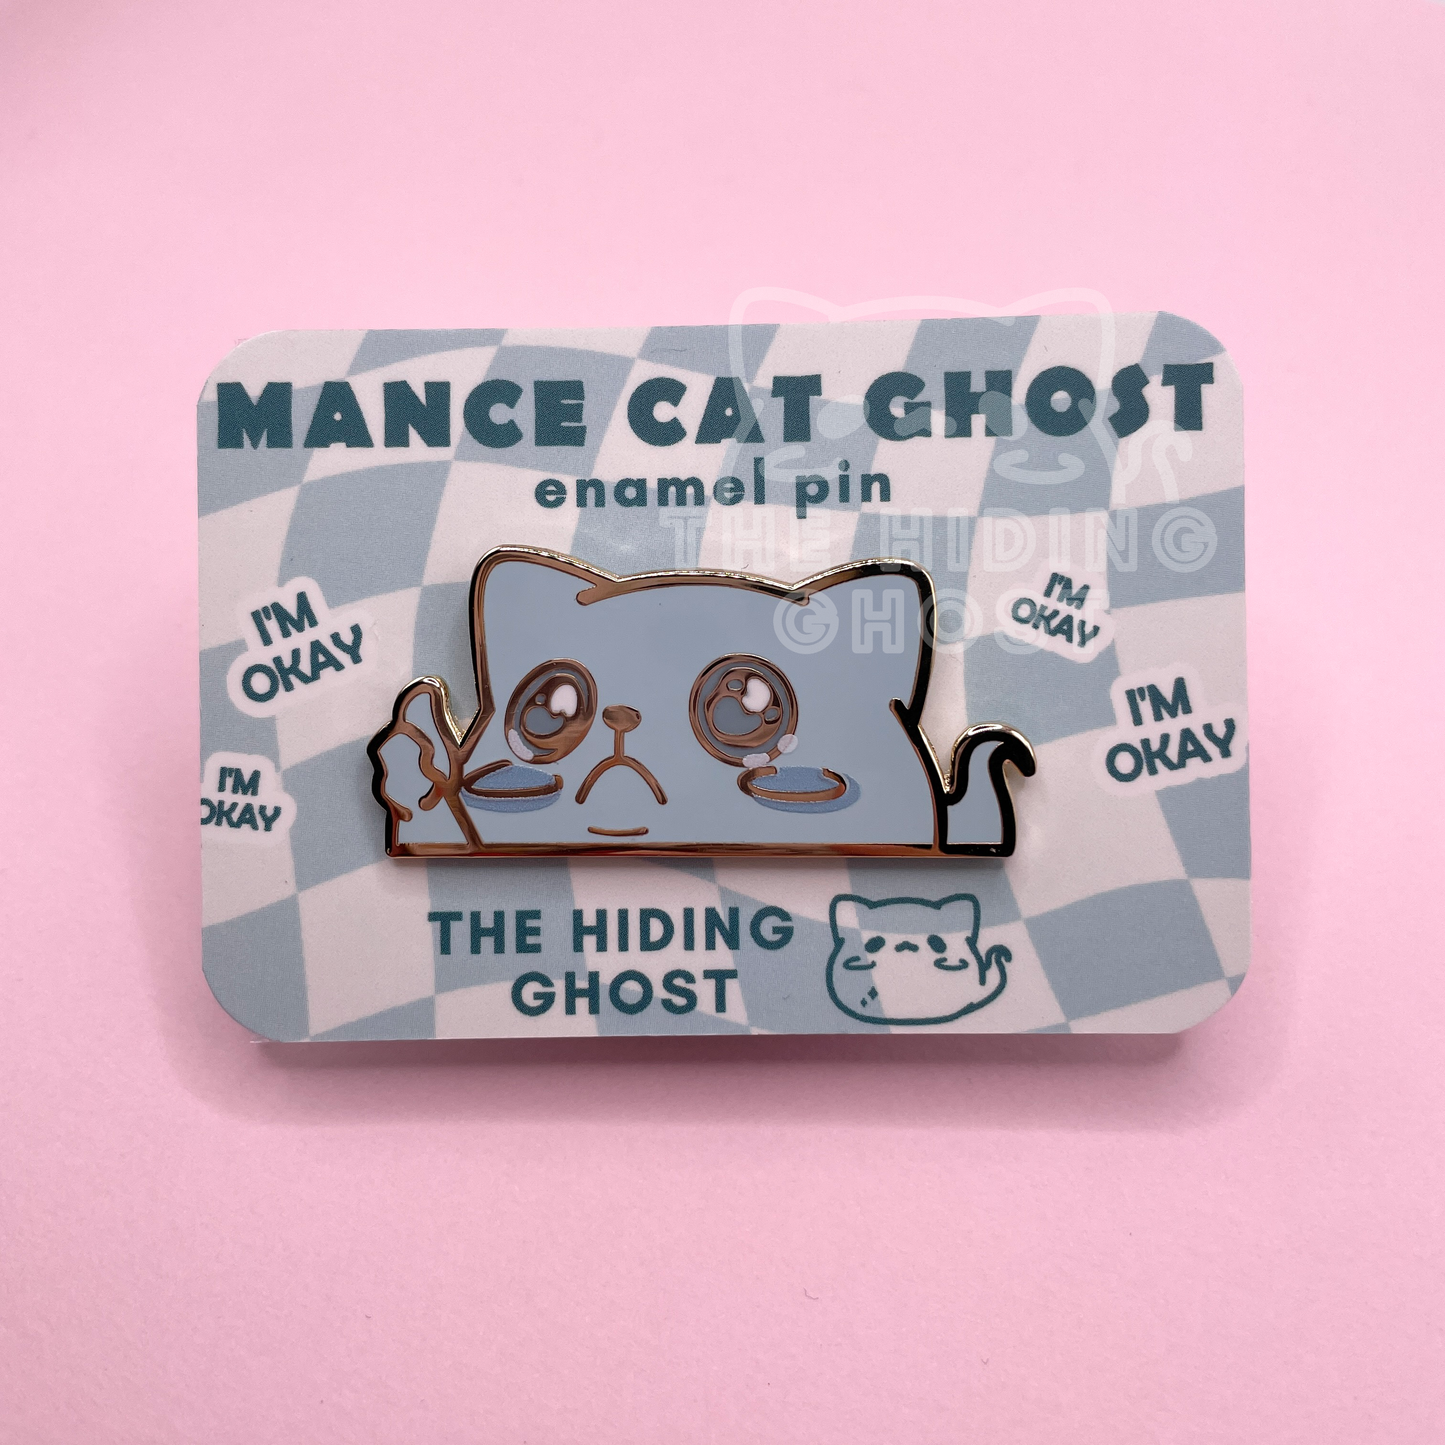 Mance Cat Ghost Enamel Pin